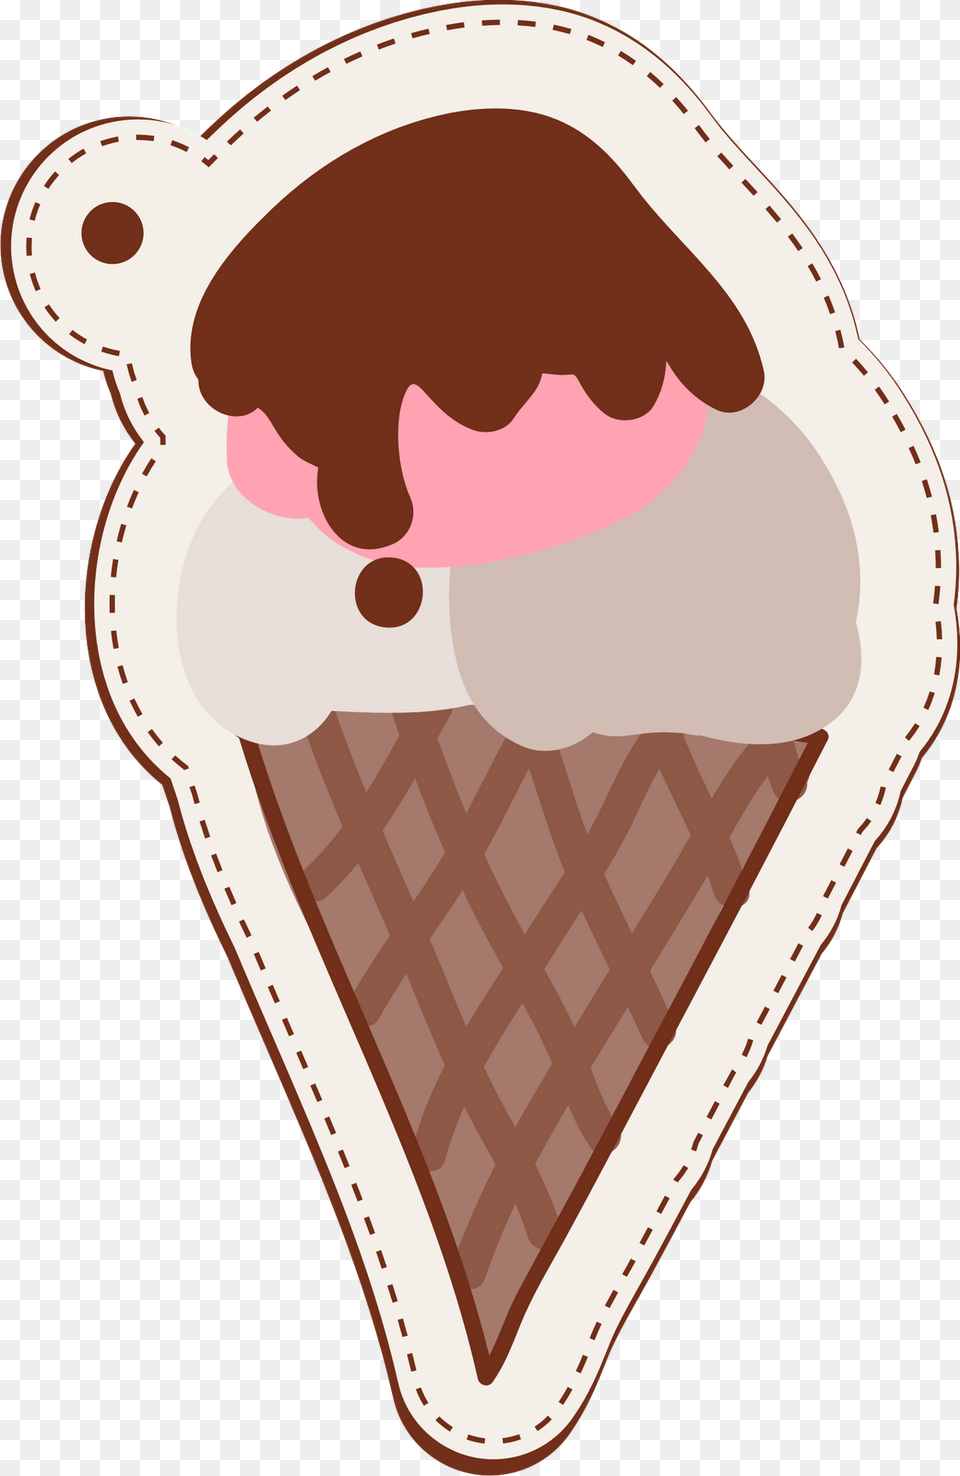 Ice Cream, Dessert, Food, Ice Cream, Smoke Pipe Png Image